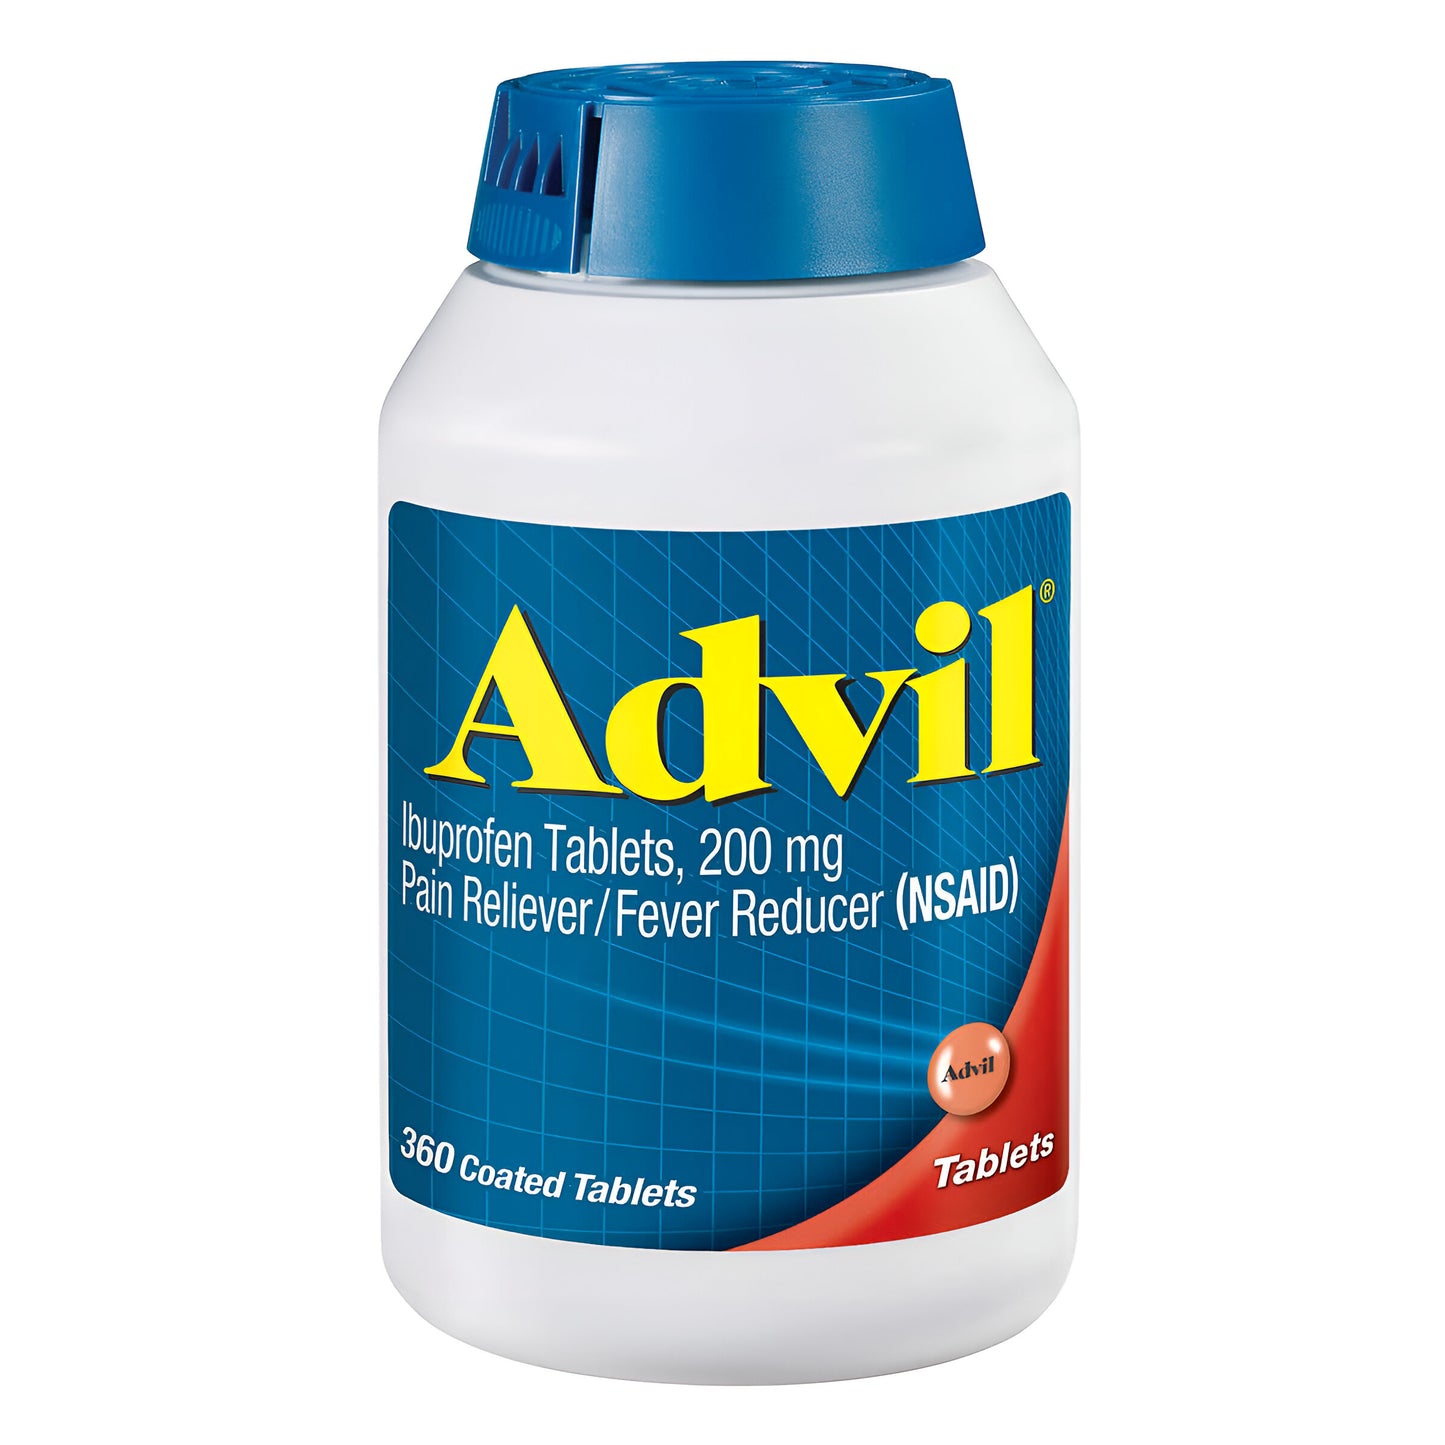 Advil Ibuprofeno 200 mg., Analgésico/reductor de fiebre, 360 comprimidos